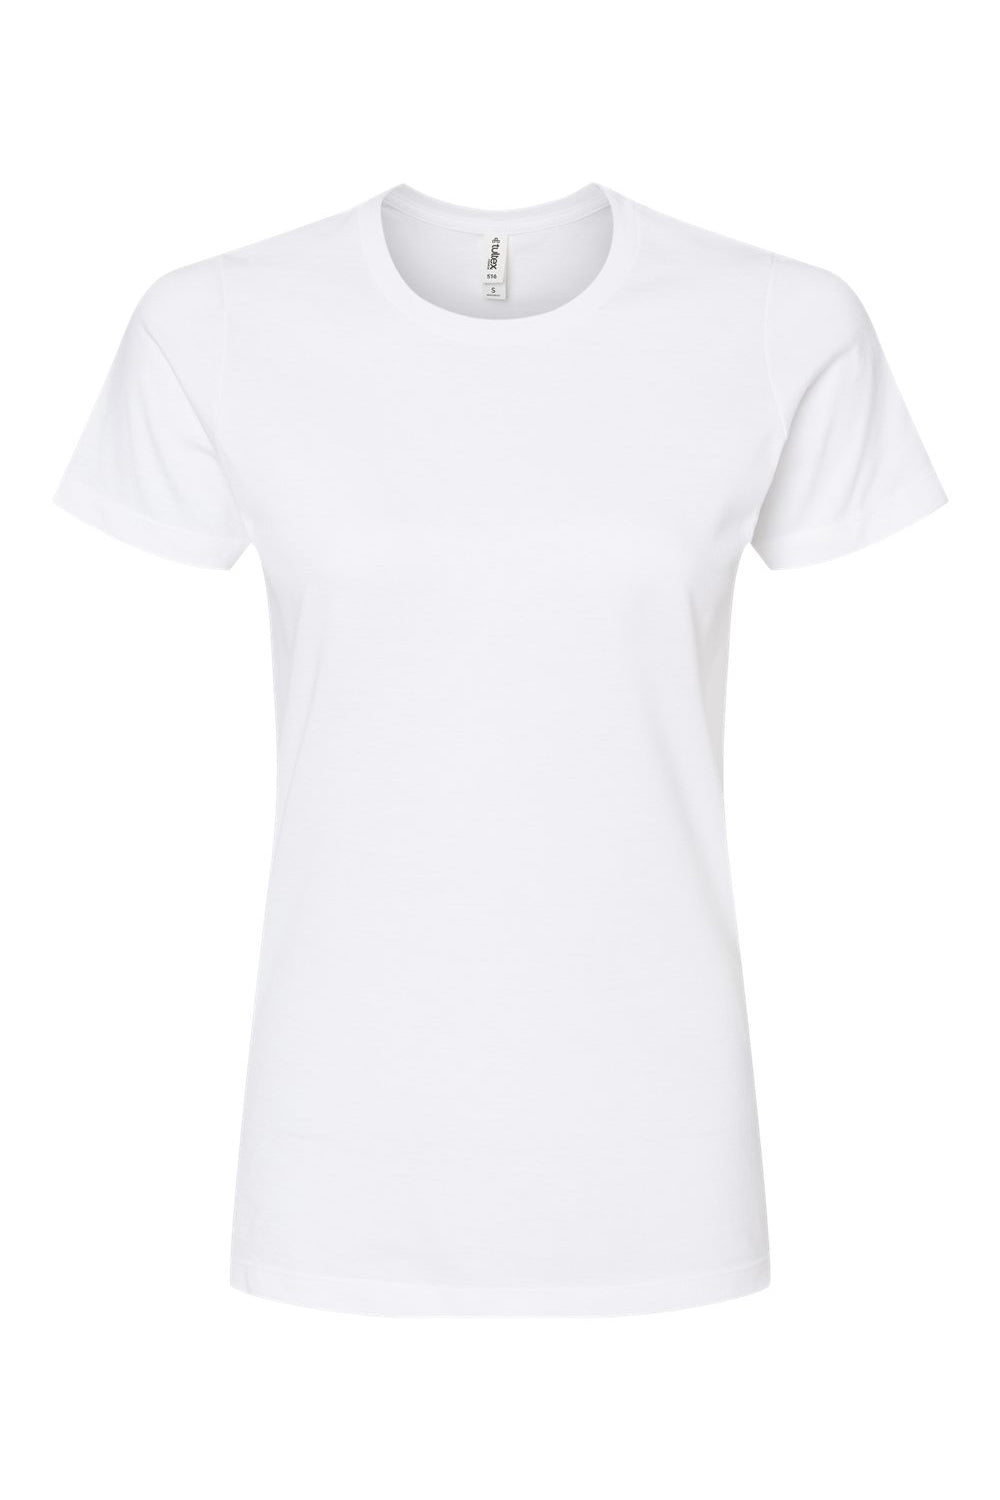 Tultex 516 Womens Premium Short Sleeve Crewneck T-Shirt White Flat Front